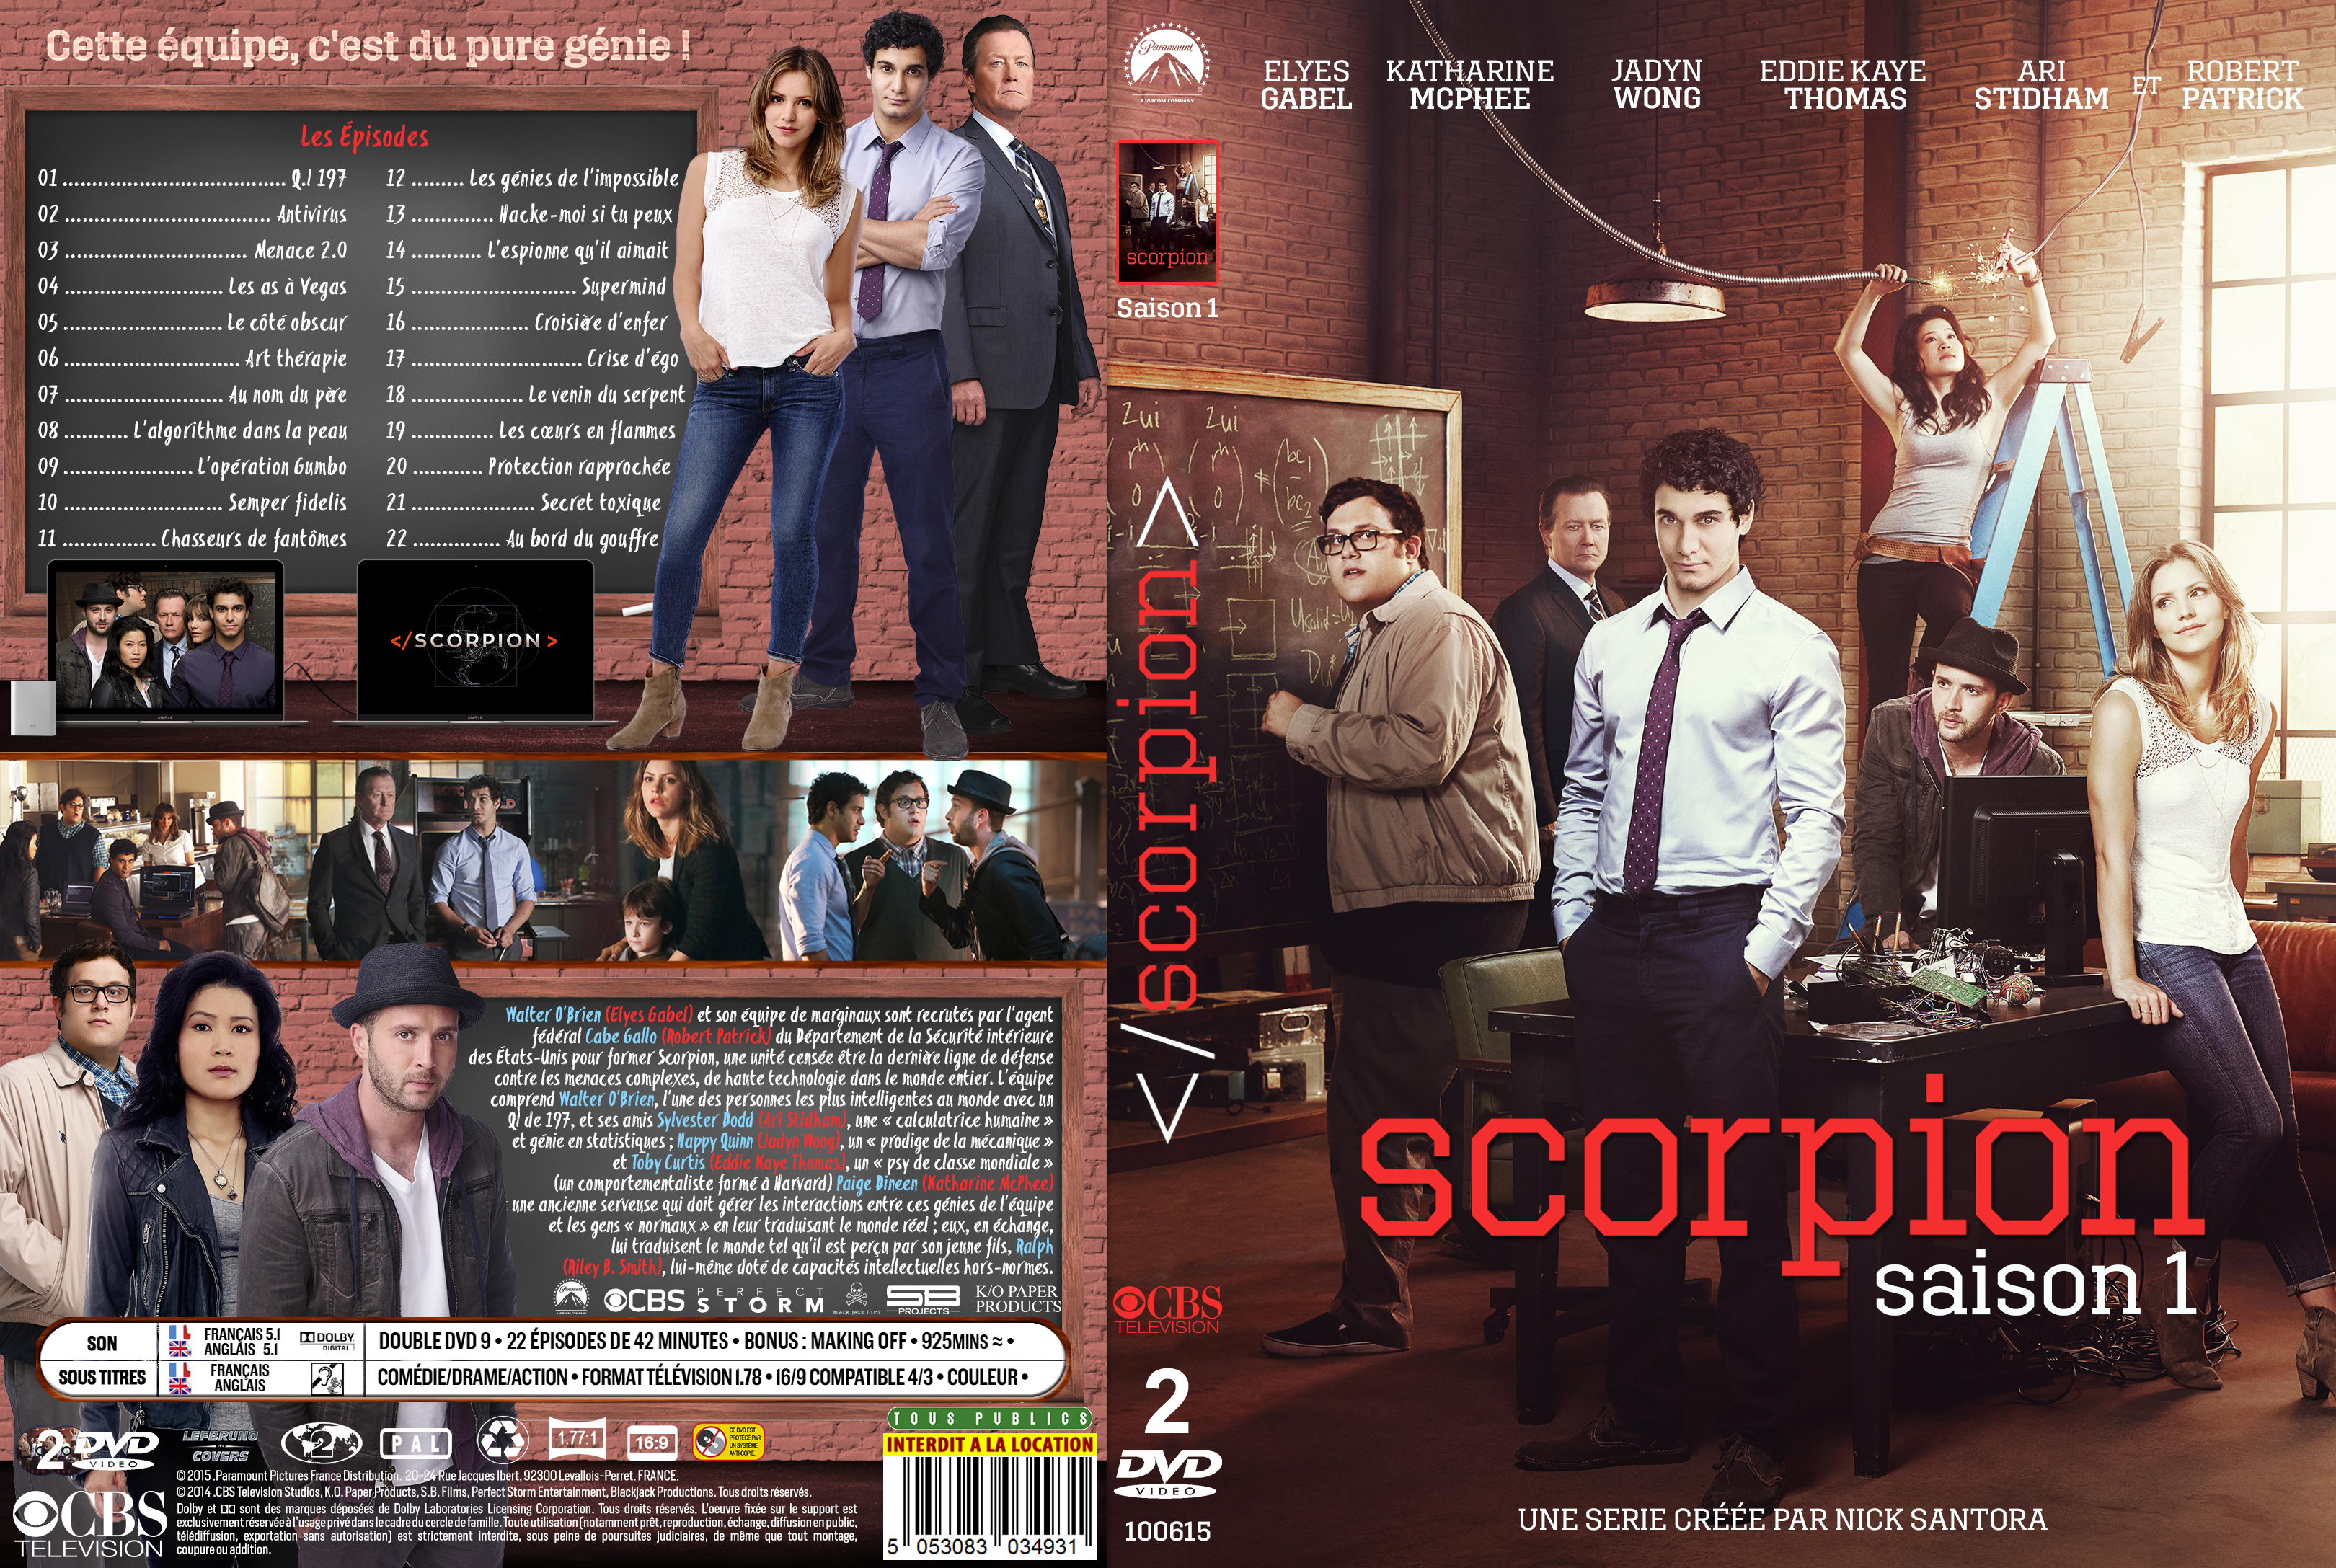 Jaquette DVD Scorpion Saison 1 custom